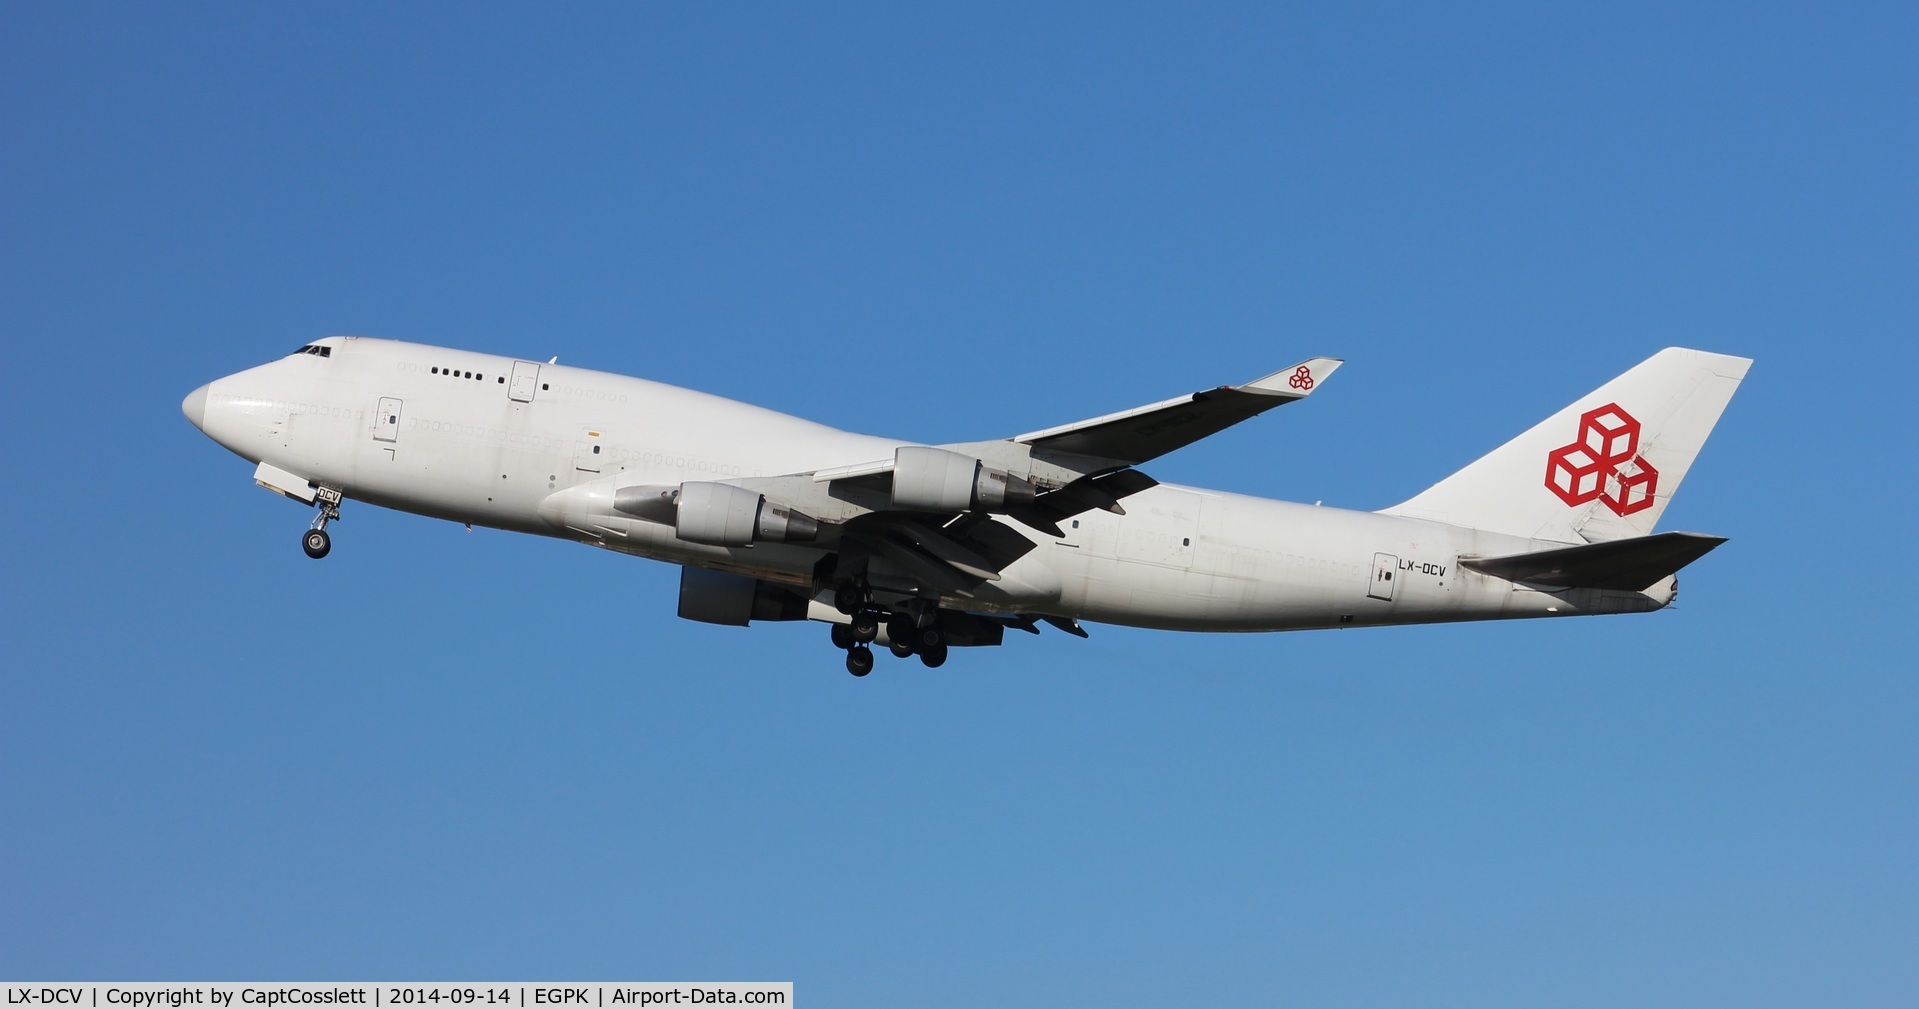 LX-DCV, 1990 Boeing 747-4B5F/SCD C/N 24619, Gear up! Taken at Prestwick September 2014. Ex - HL7480 of Korean Air